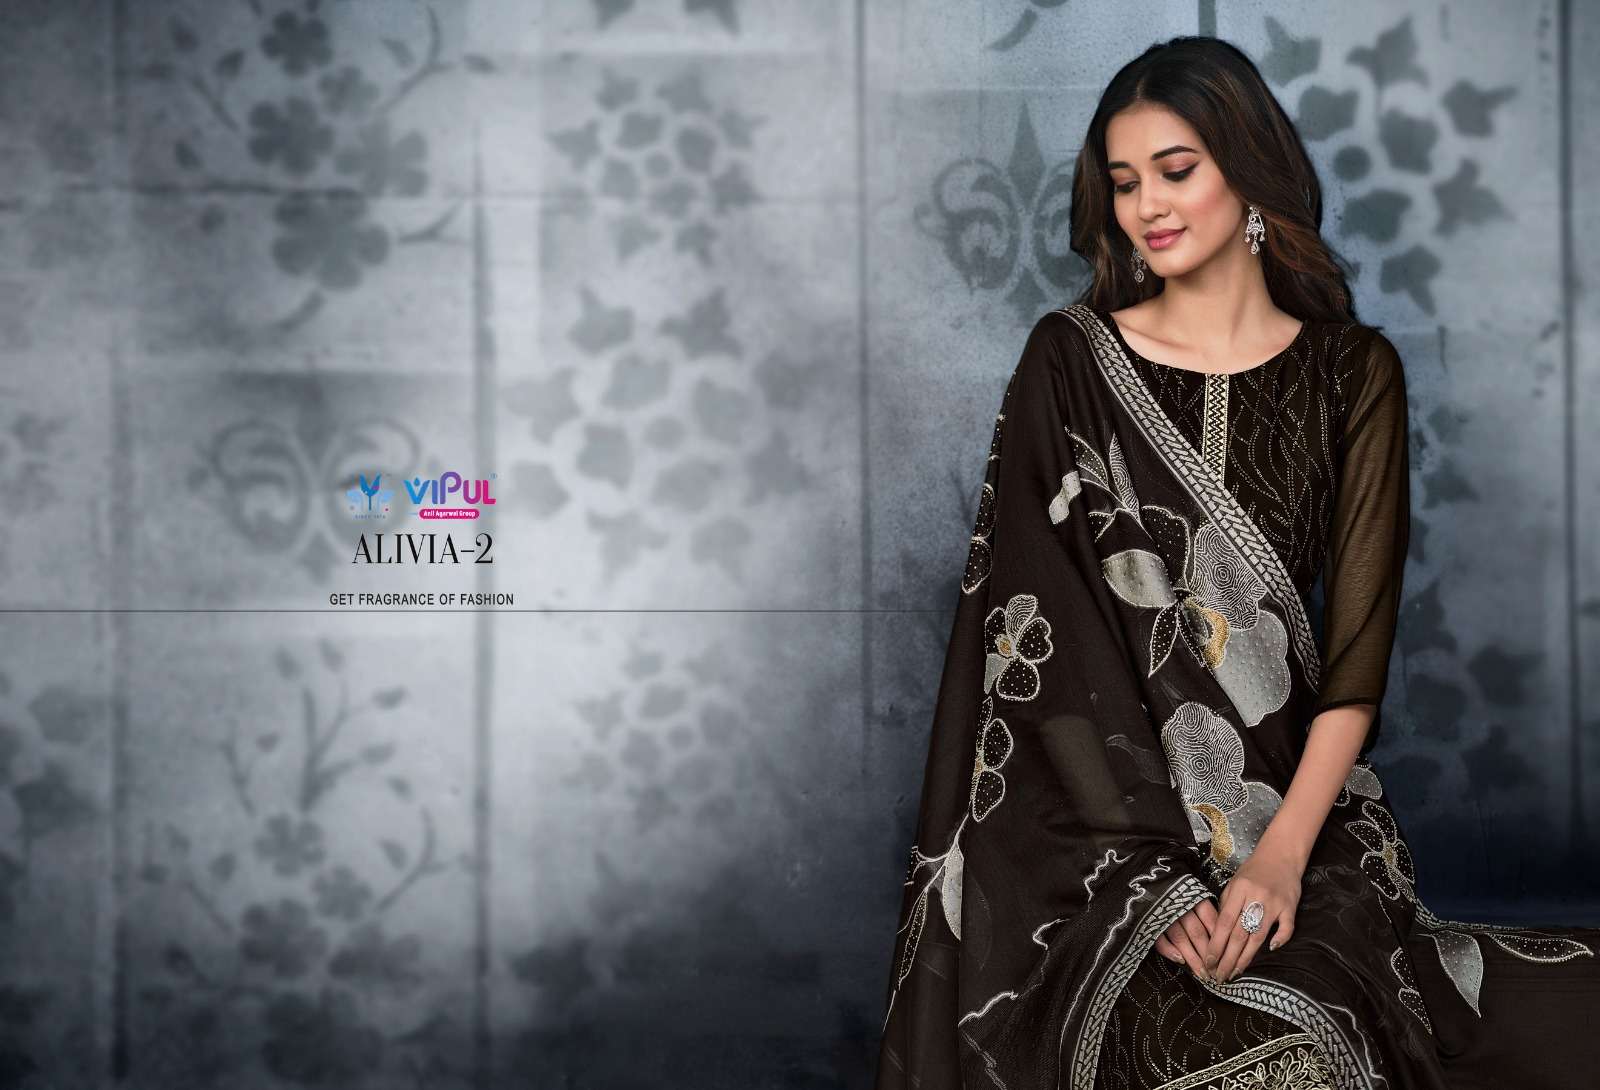 vipul fashion alivia-2 5561-5566 series latest designer straight cut salwar kameez wholesaler surat gujarat